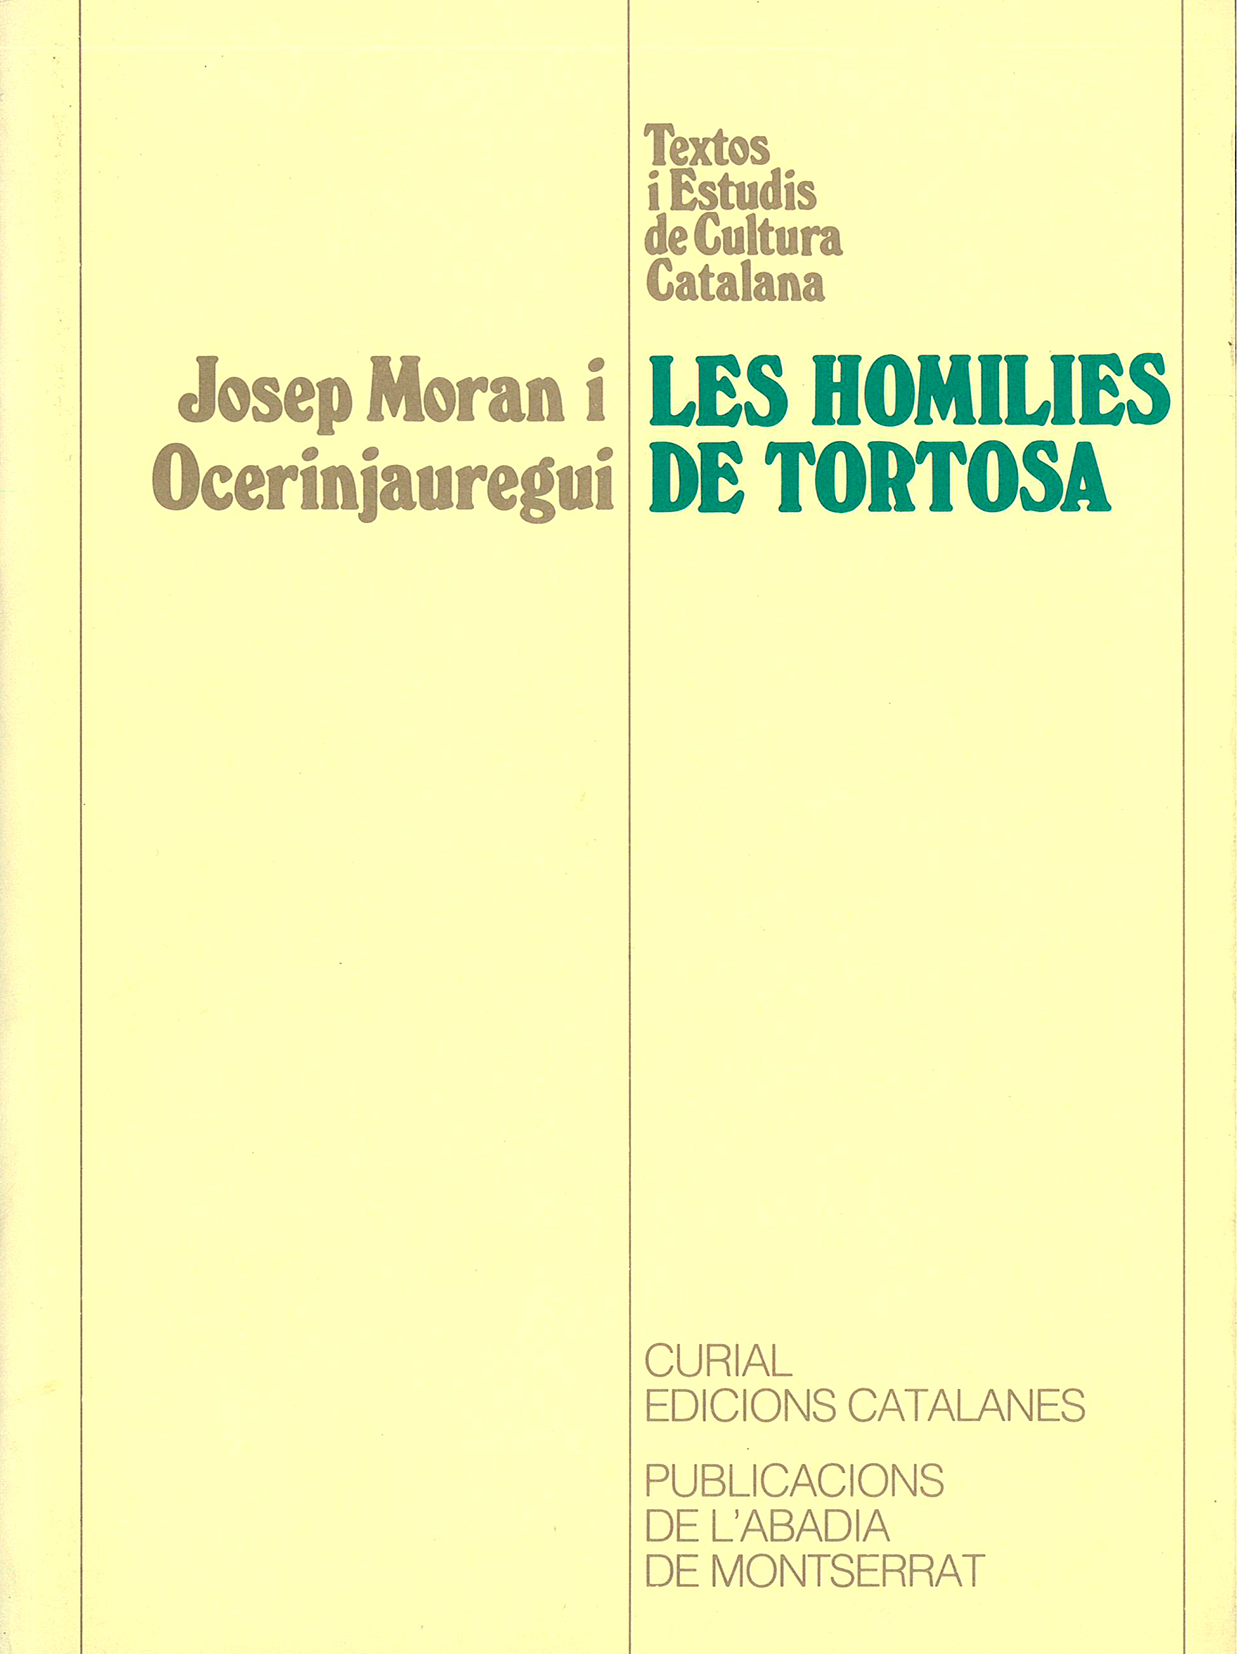 Josep Moran i Ocerinjauregui